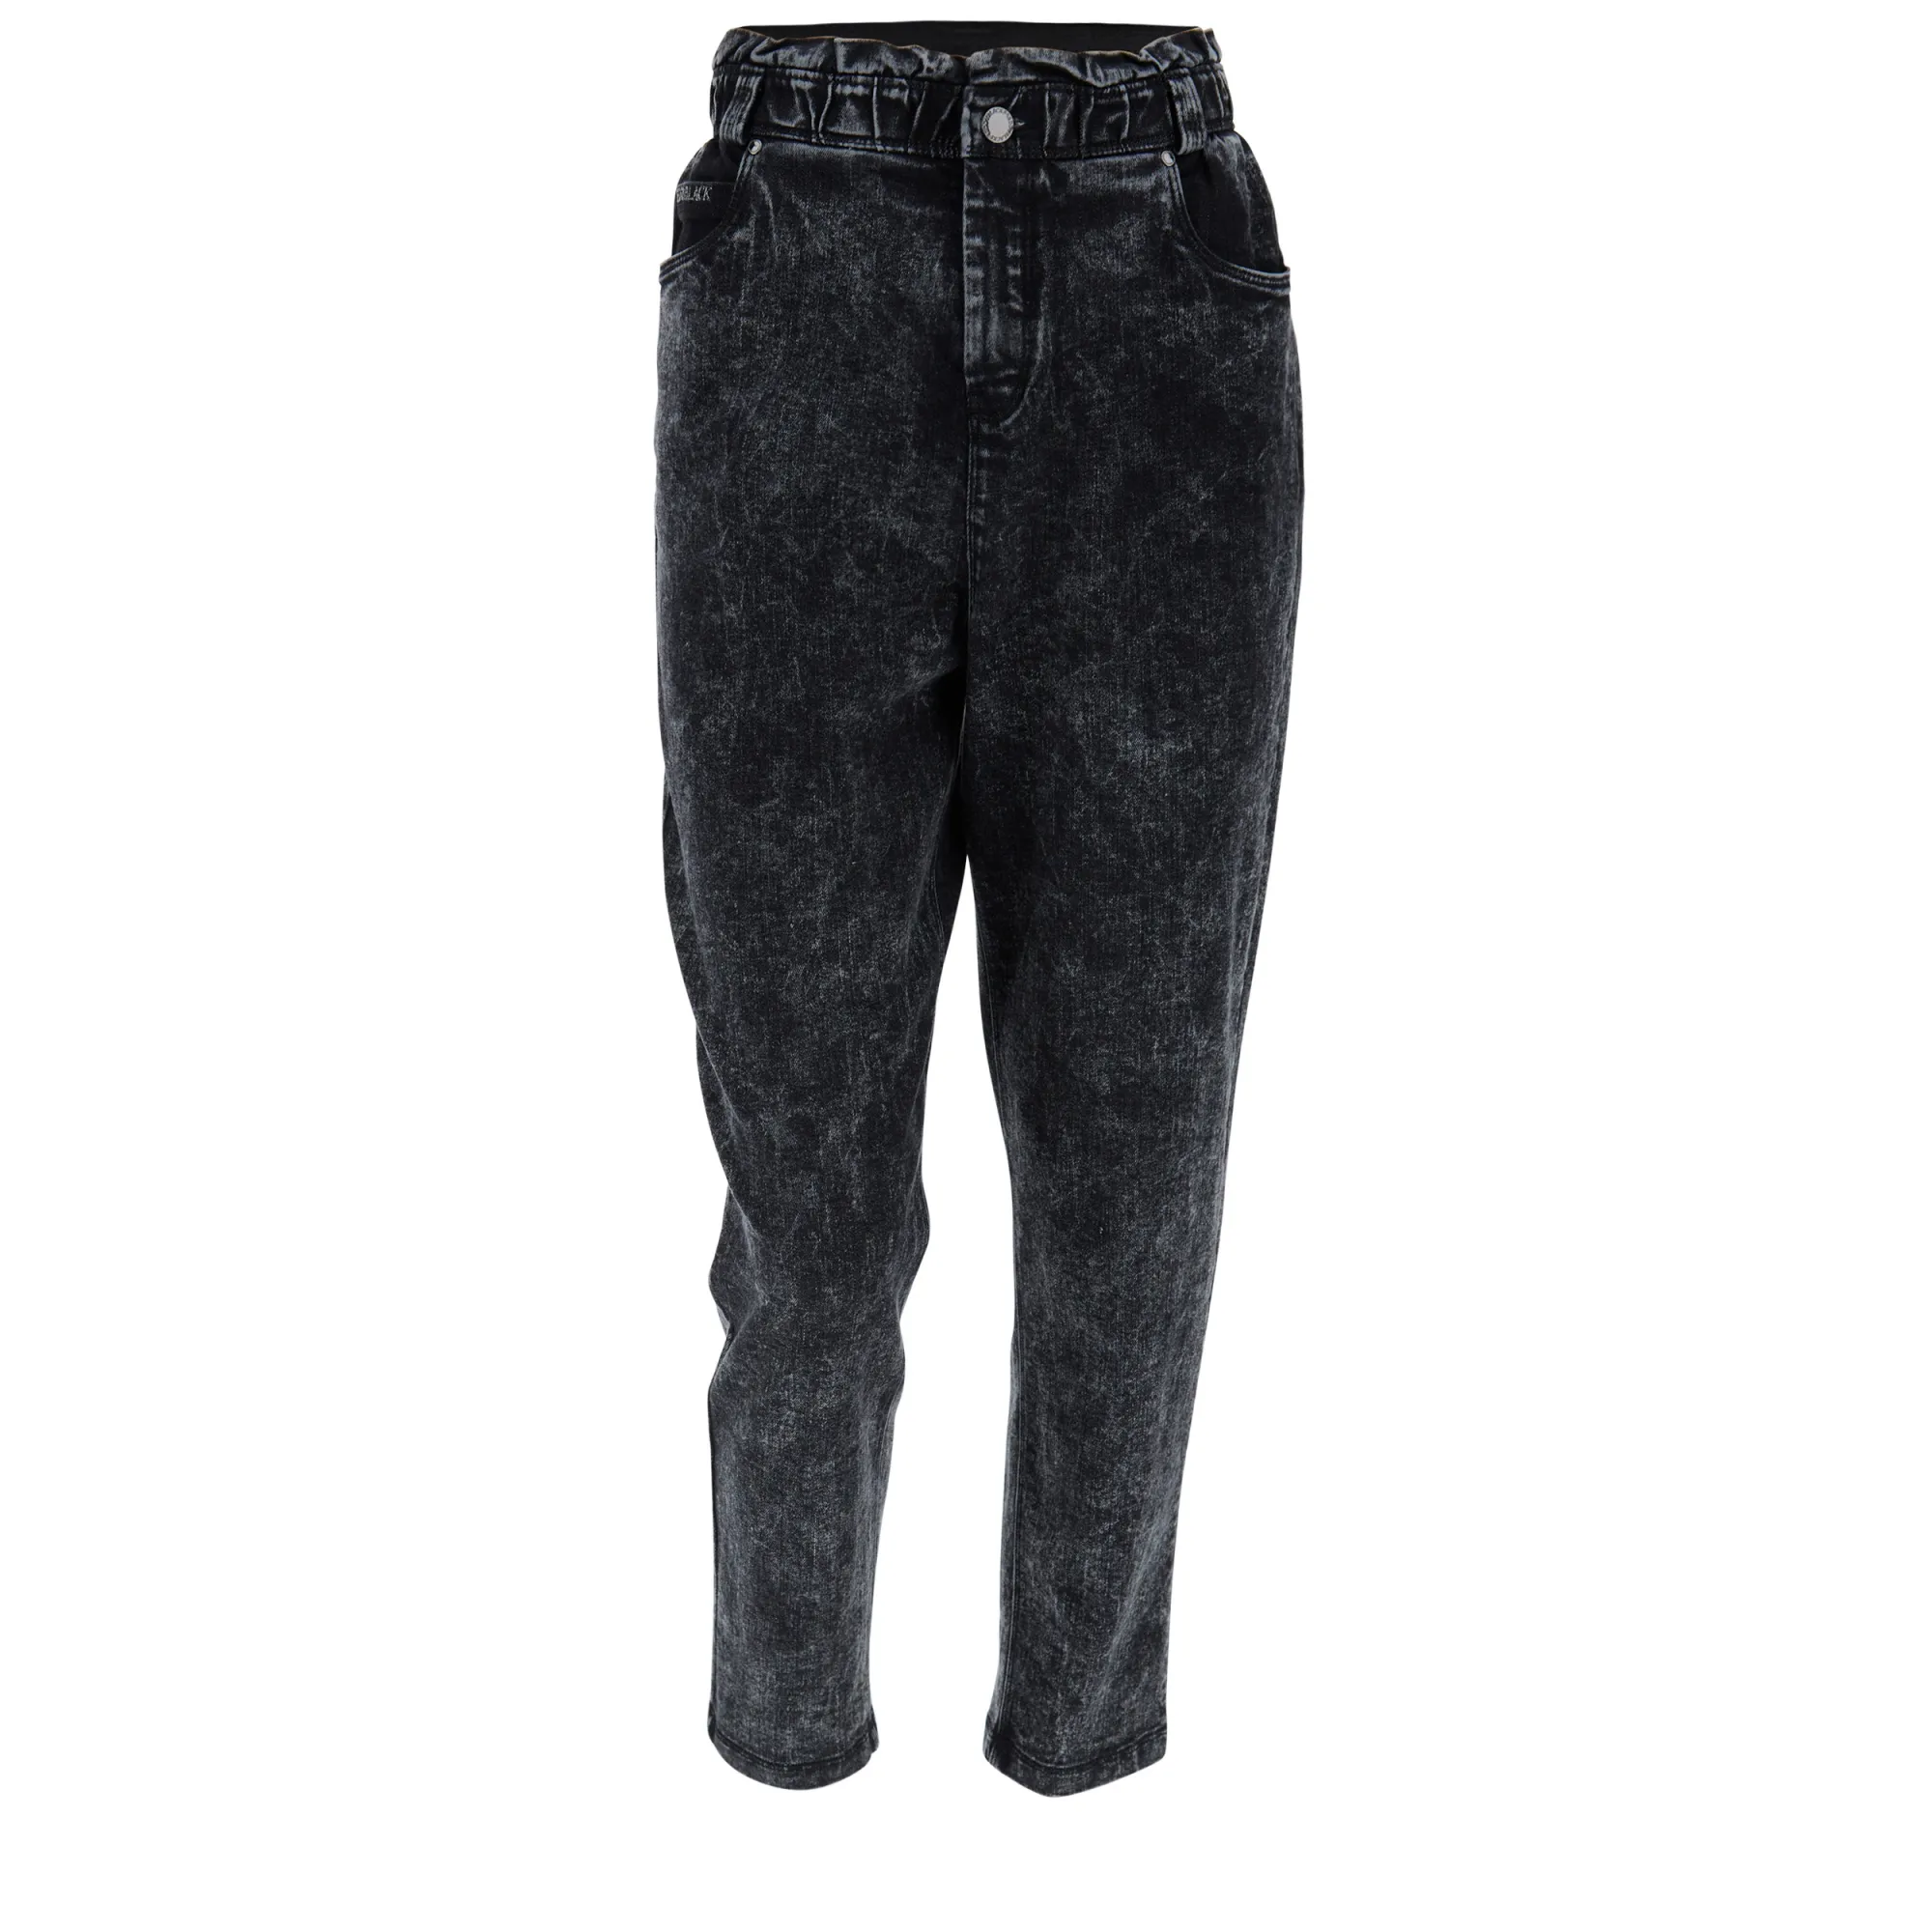 Freddy Fit Jeans - 7/8 Super High Waist Regular - Paperbag Waist - Bleached Grey Denim – Black Seam - J83N